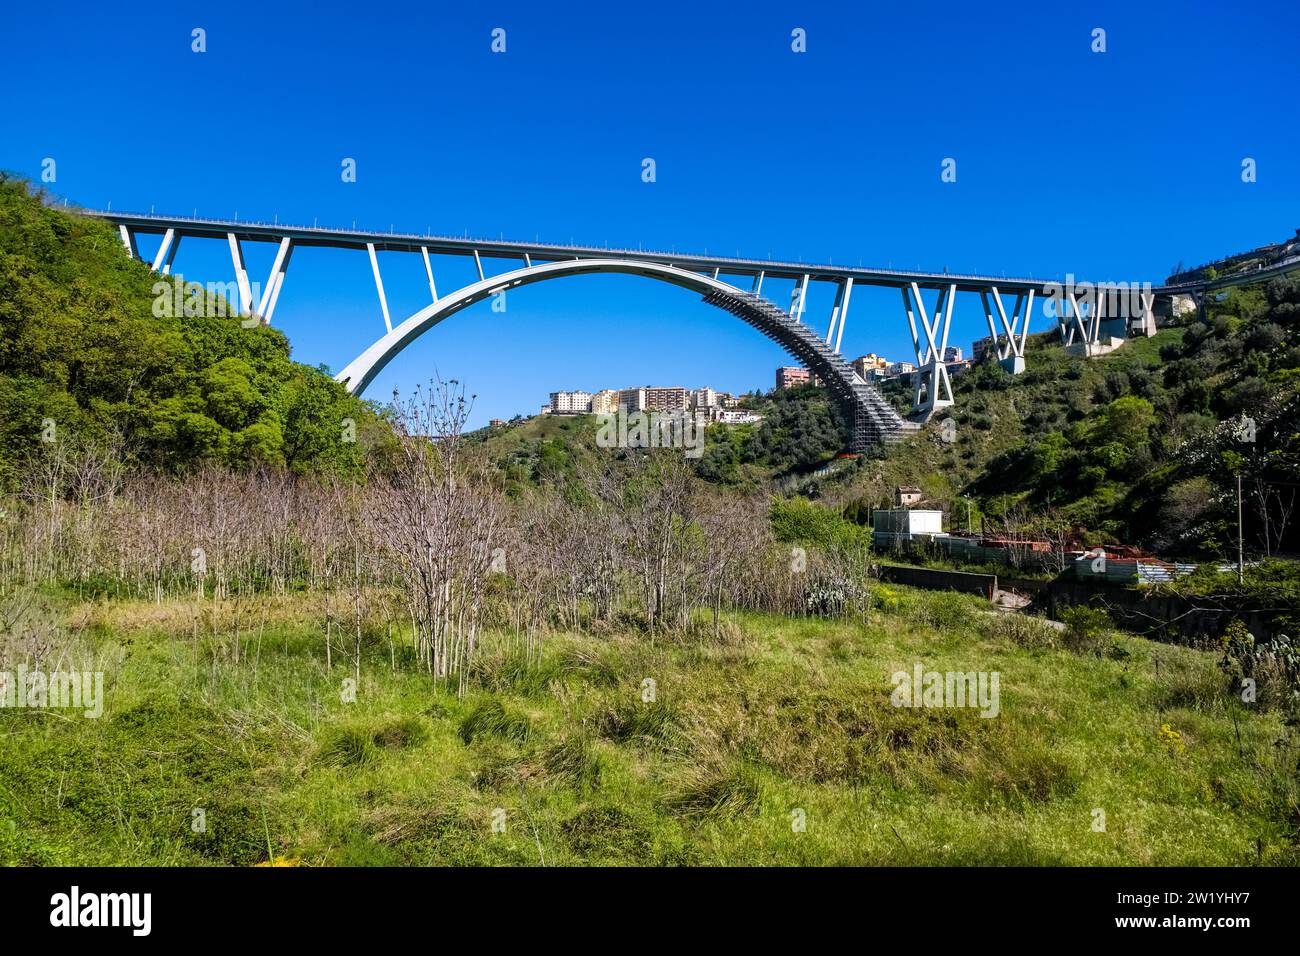 The Ponte Bisantis bridge in Catanzaro, built by Riccardo Morandi, is the largest arch bridge in Italy. Stock Photo